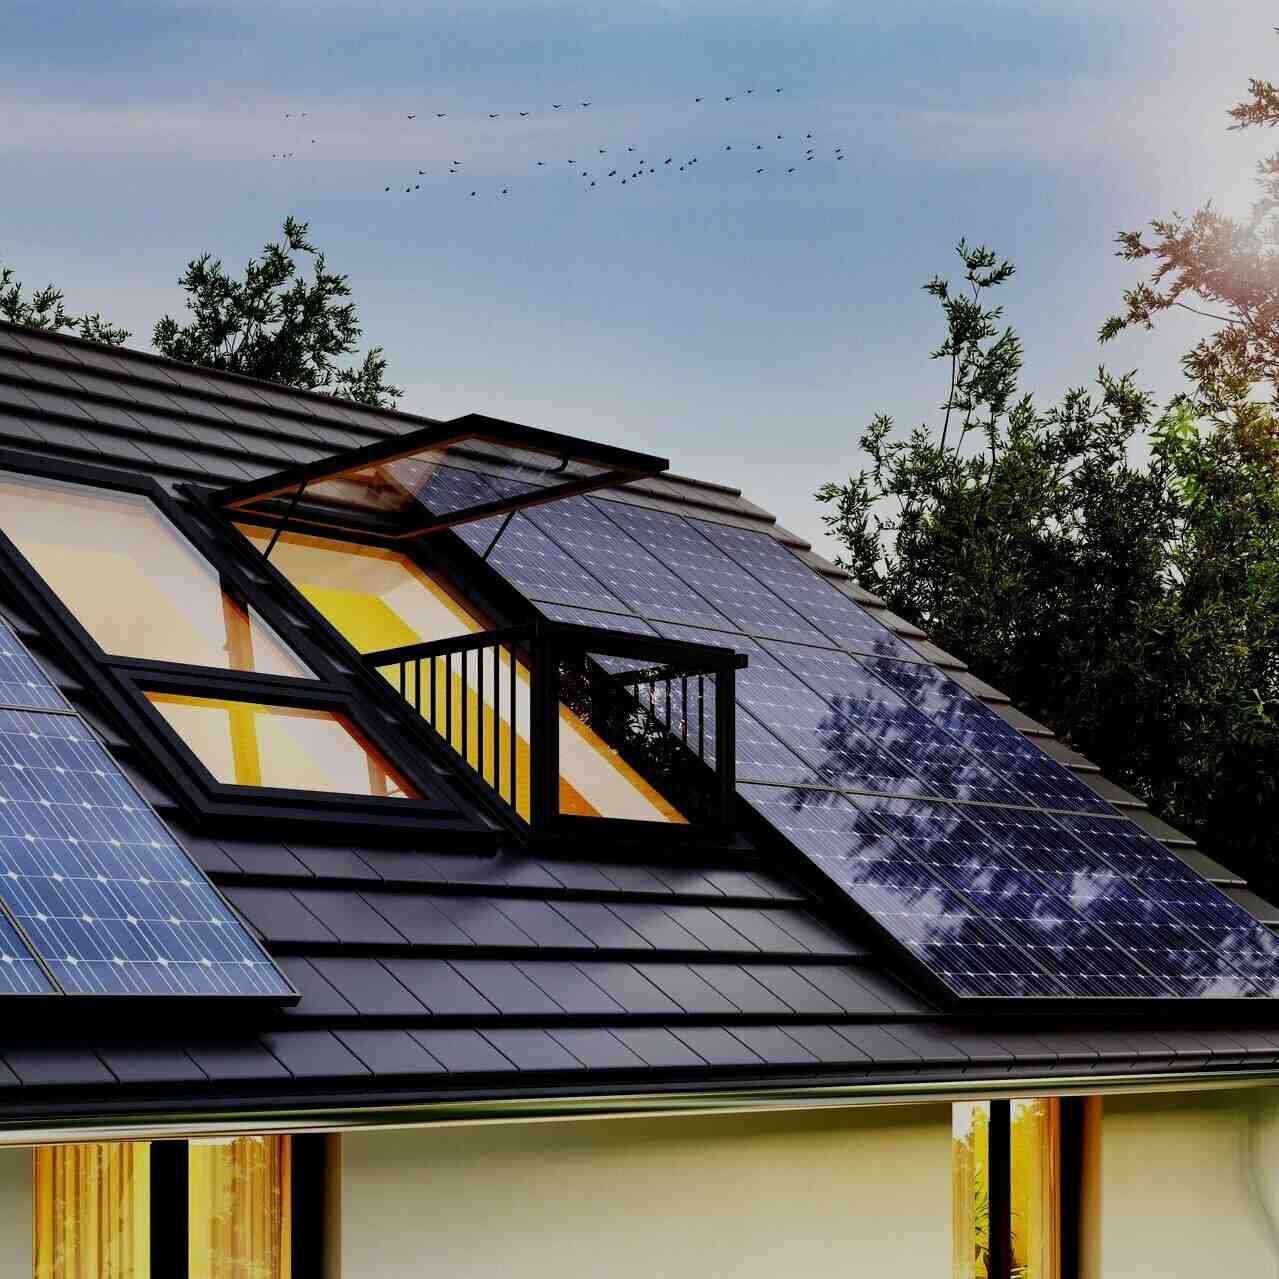 Is solar installation a good career?